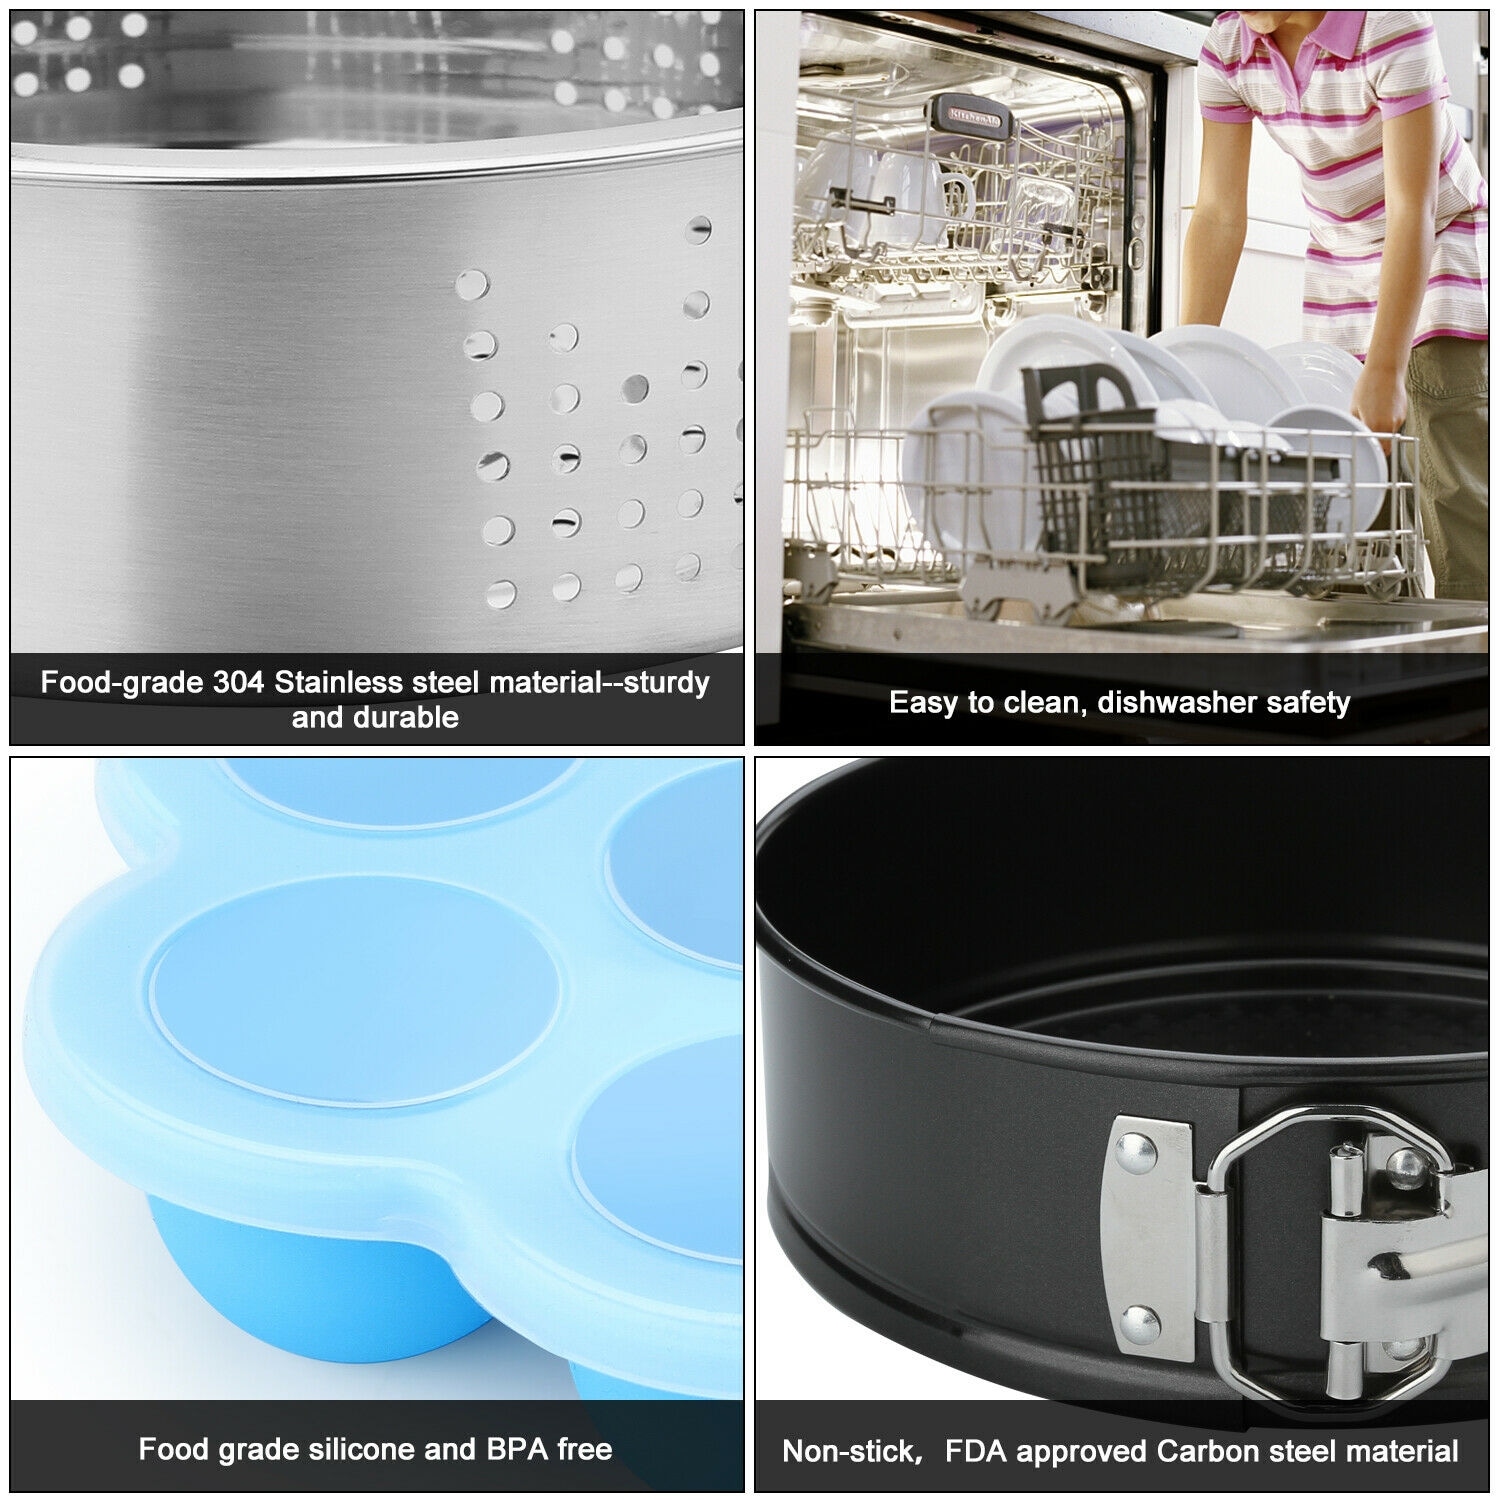 8x Instant Pot Accessories Set Steamer Basket for Insta Pressure Cooker 5,6, 8qt - On Sale - Bed Bath & Beyond - 35096950